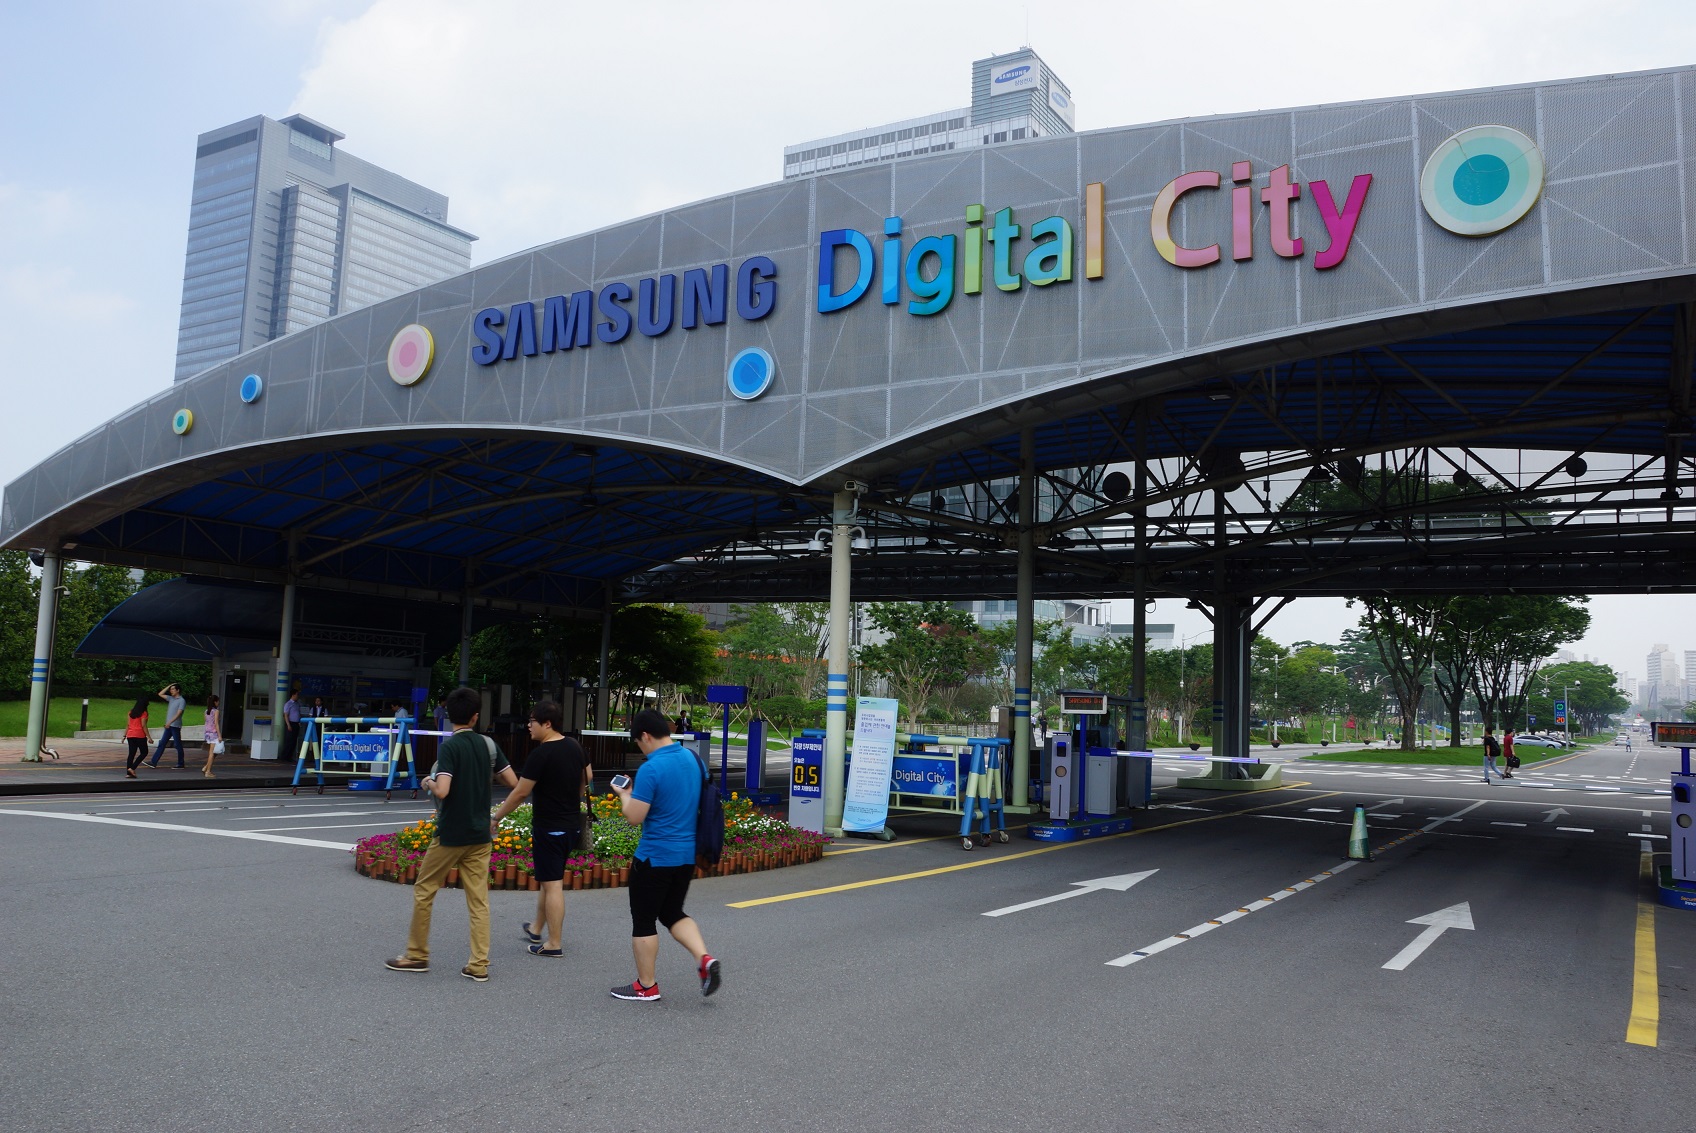 Samsung Digital City sign